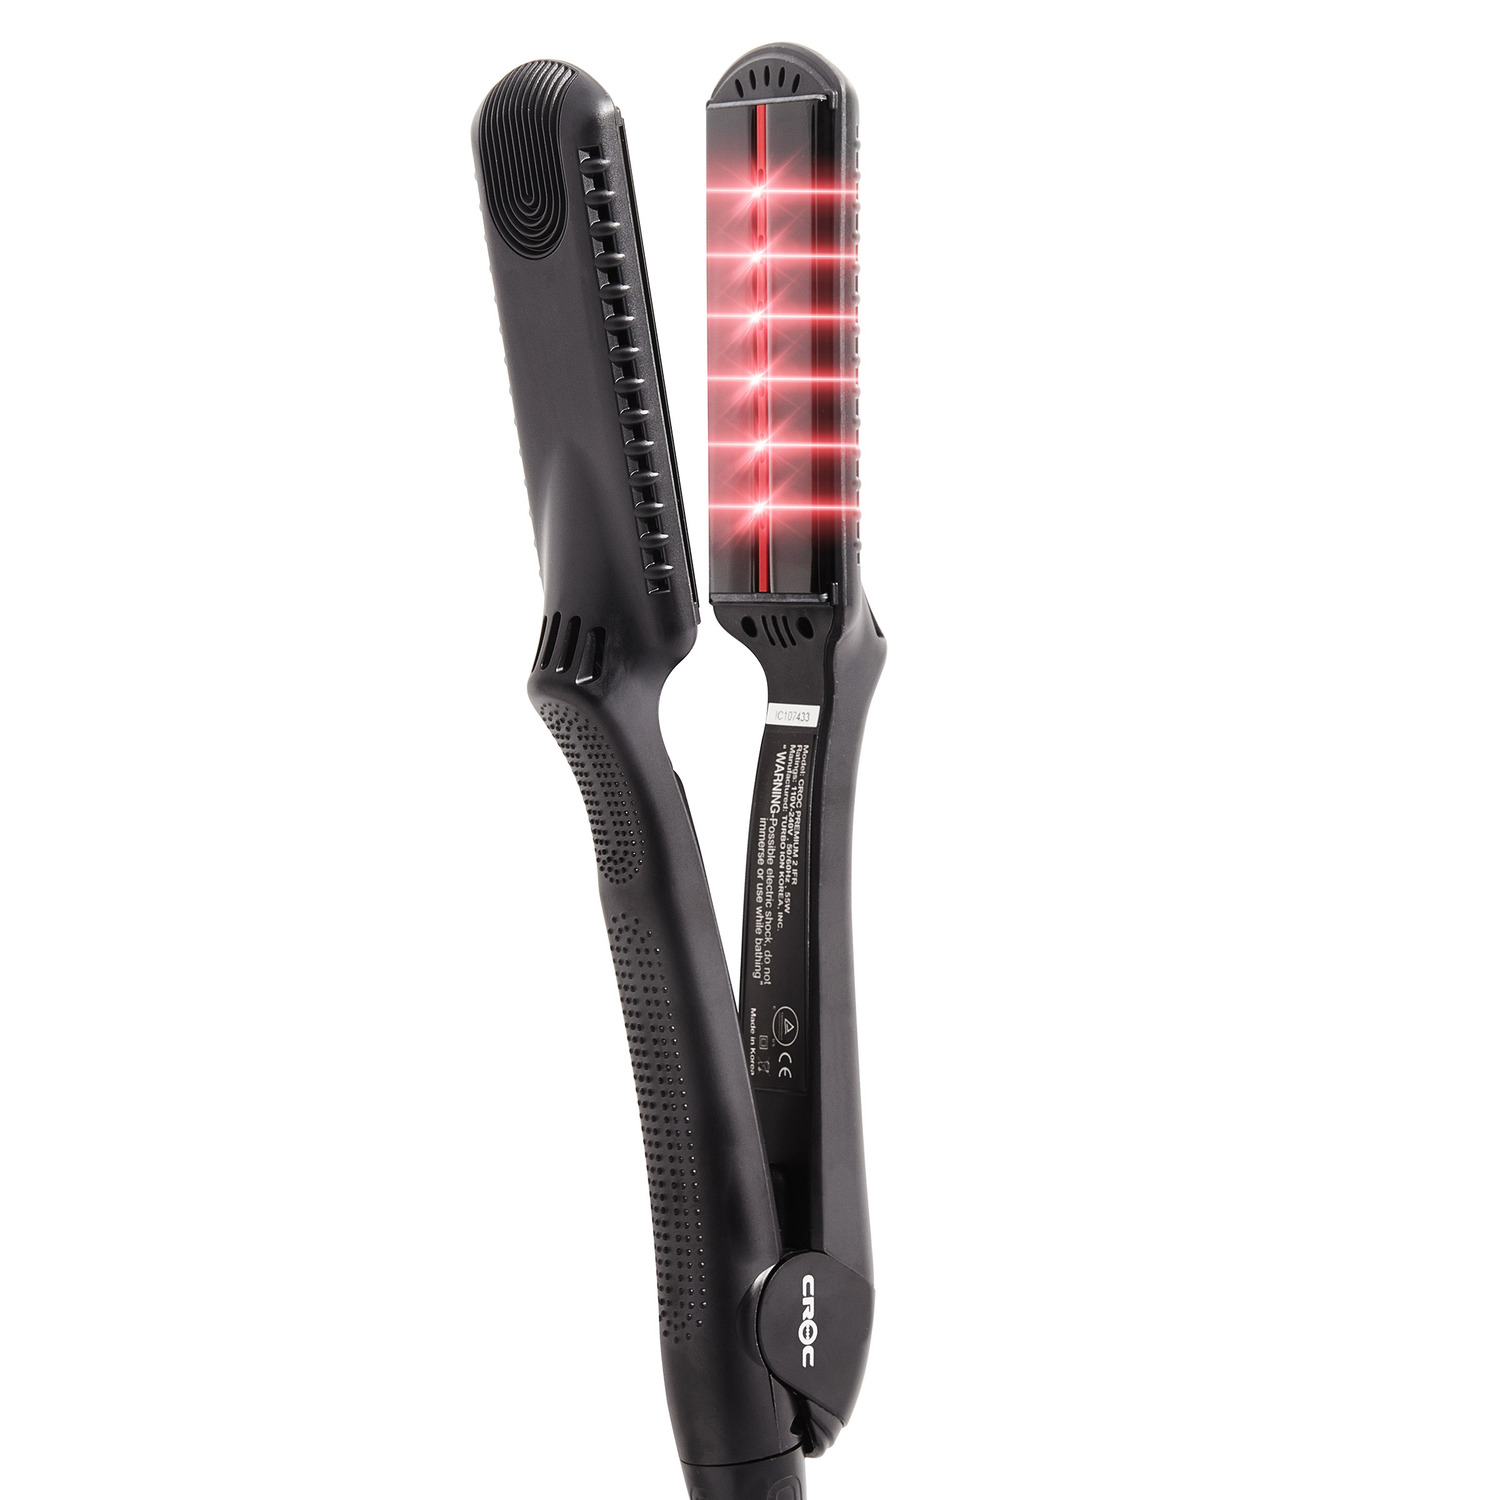 CROC Professional Premium Infrared 1.5” Flat Hair Iron Straightening Digital NEW